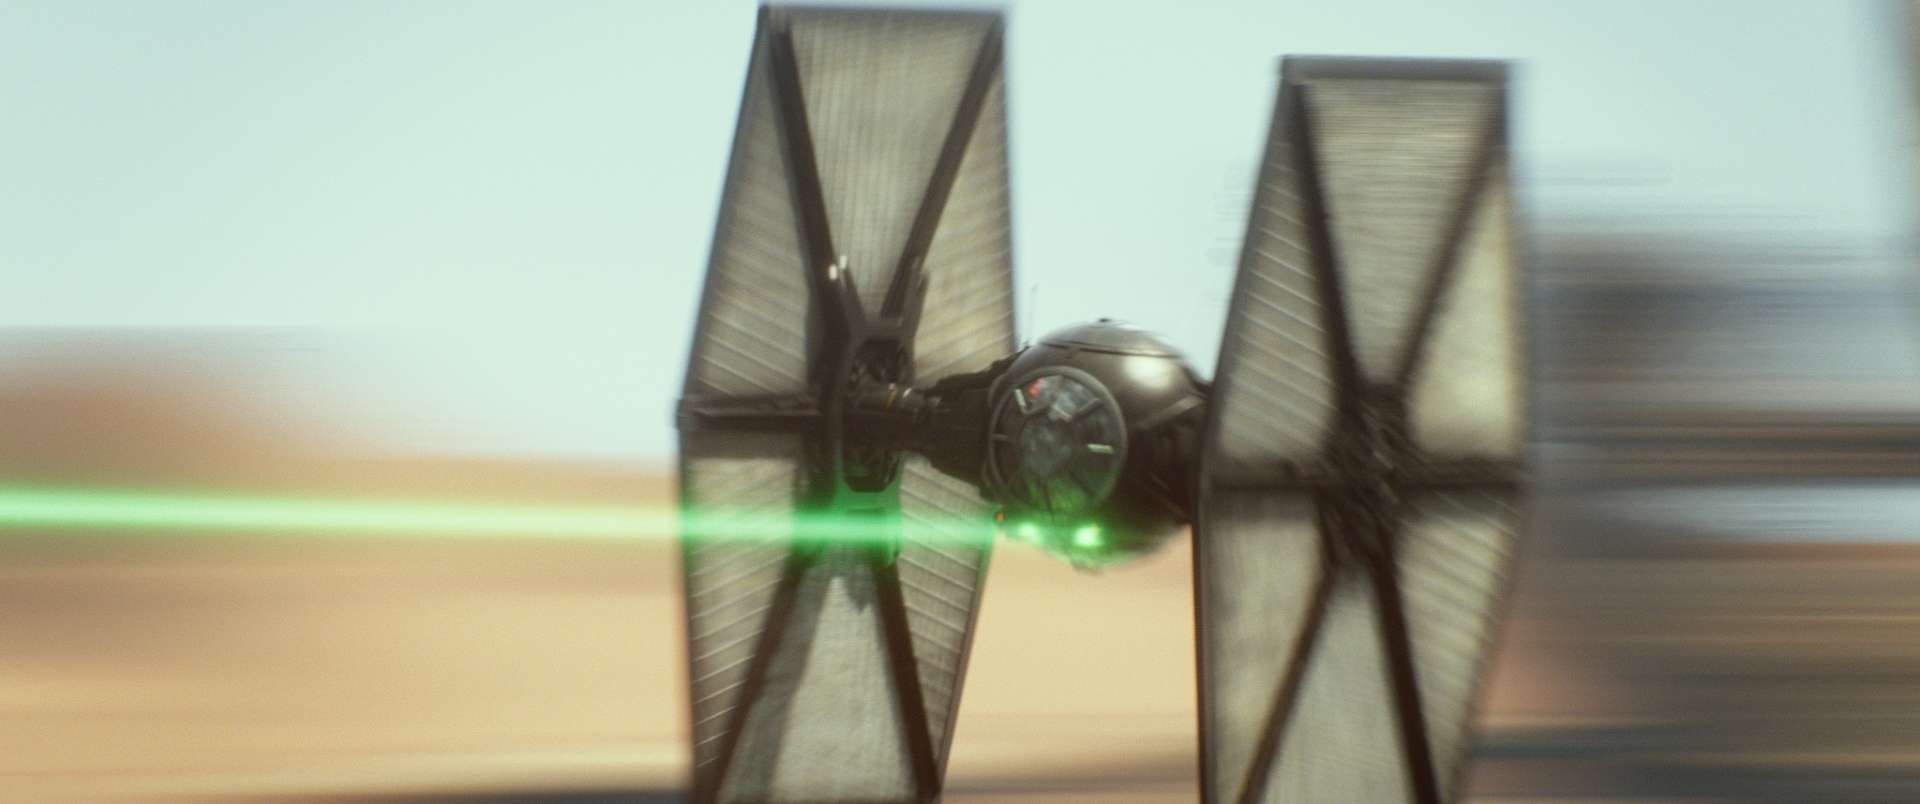 Star Wars Episode VII The Force Awakens Wallpaper 053